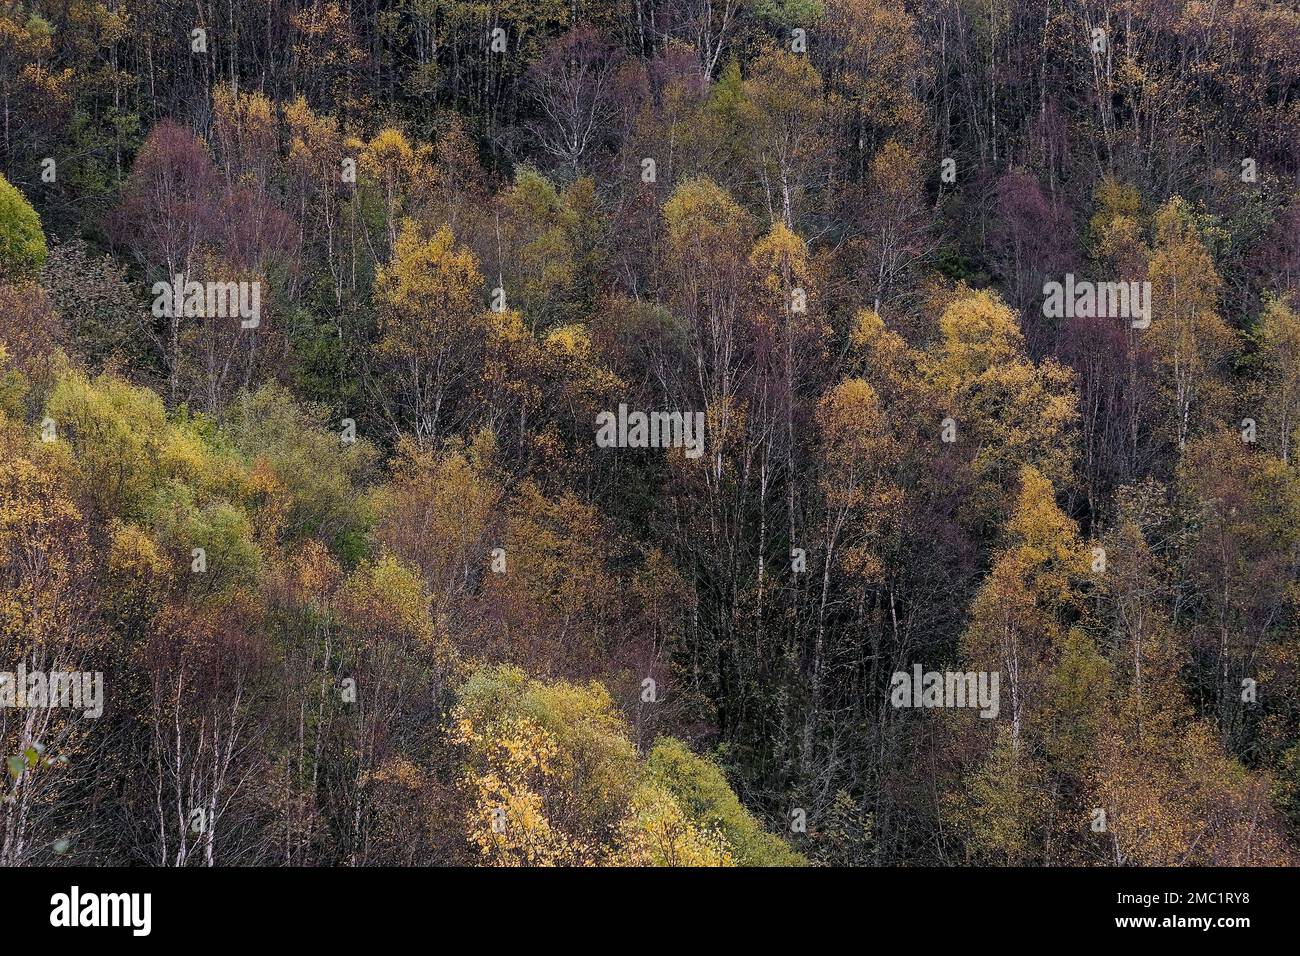 European white birch (Betula pubescens) stand with autumnal golden foliage Stock Photo